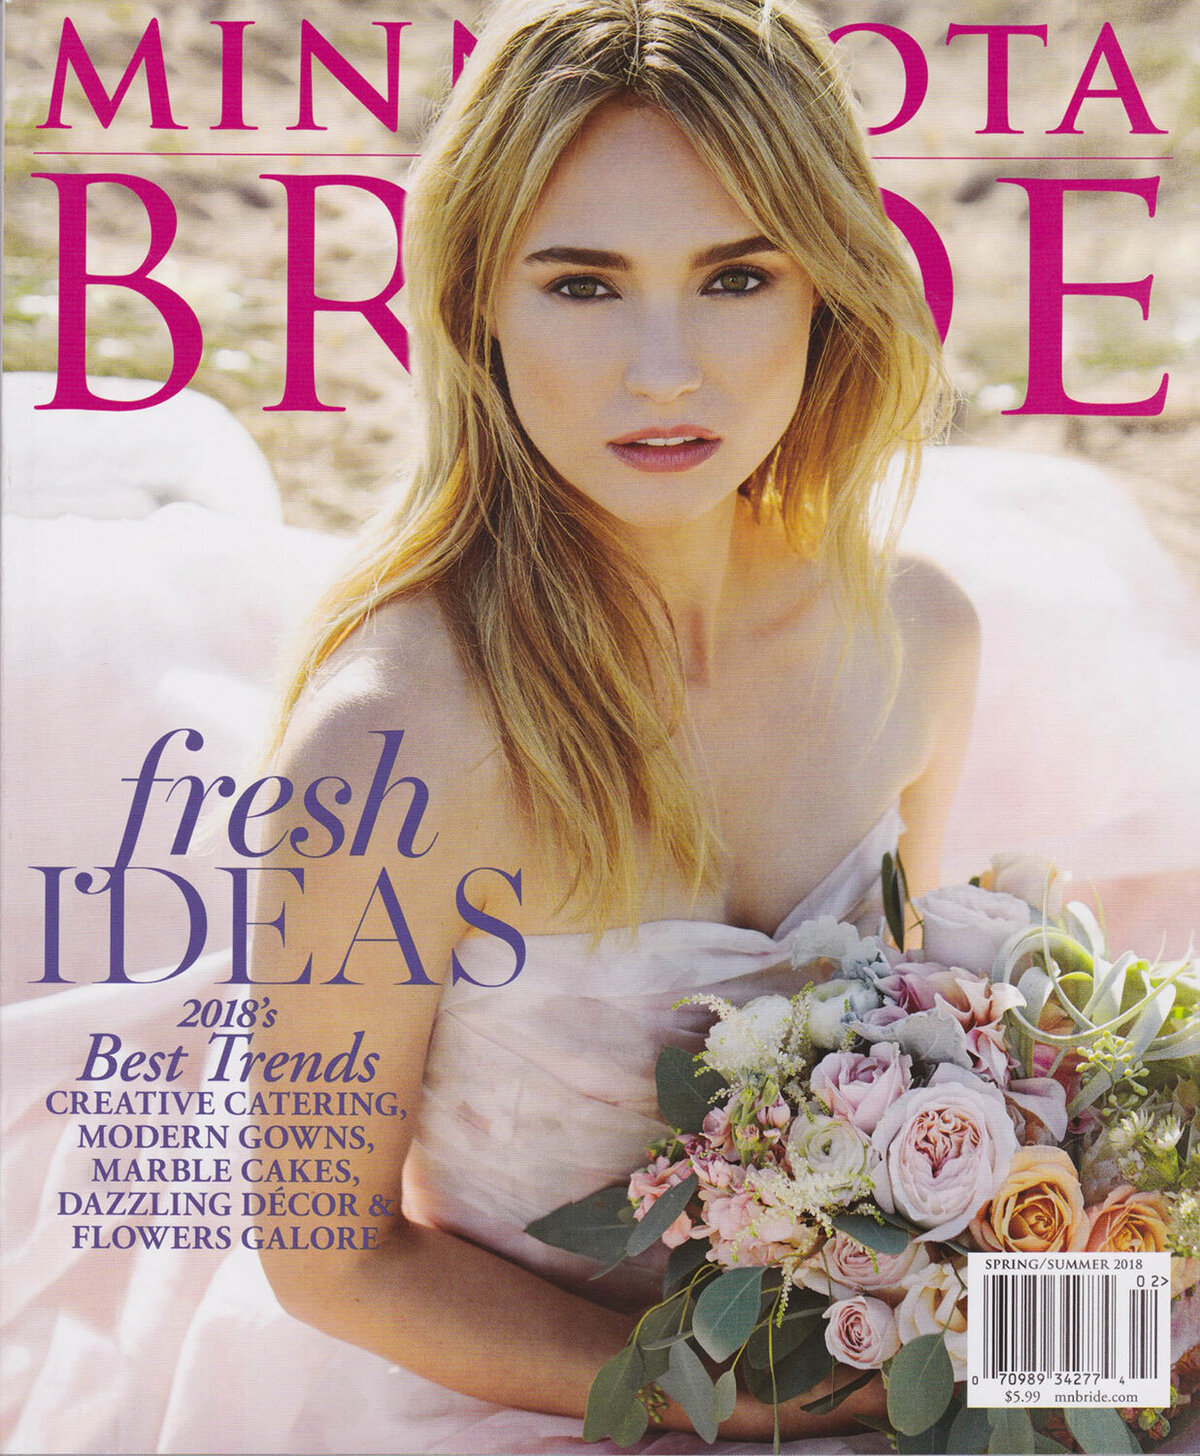 Minnesota Bride Magazine Cover Makeup Artist